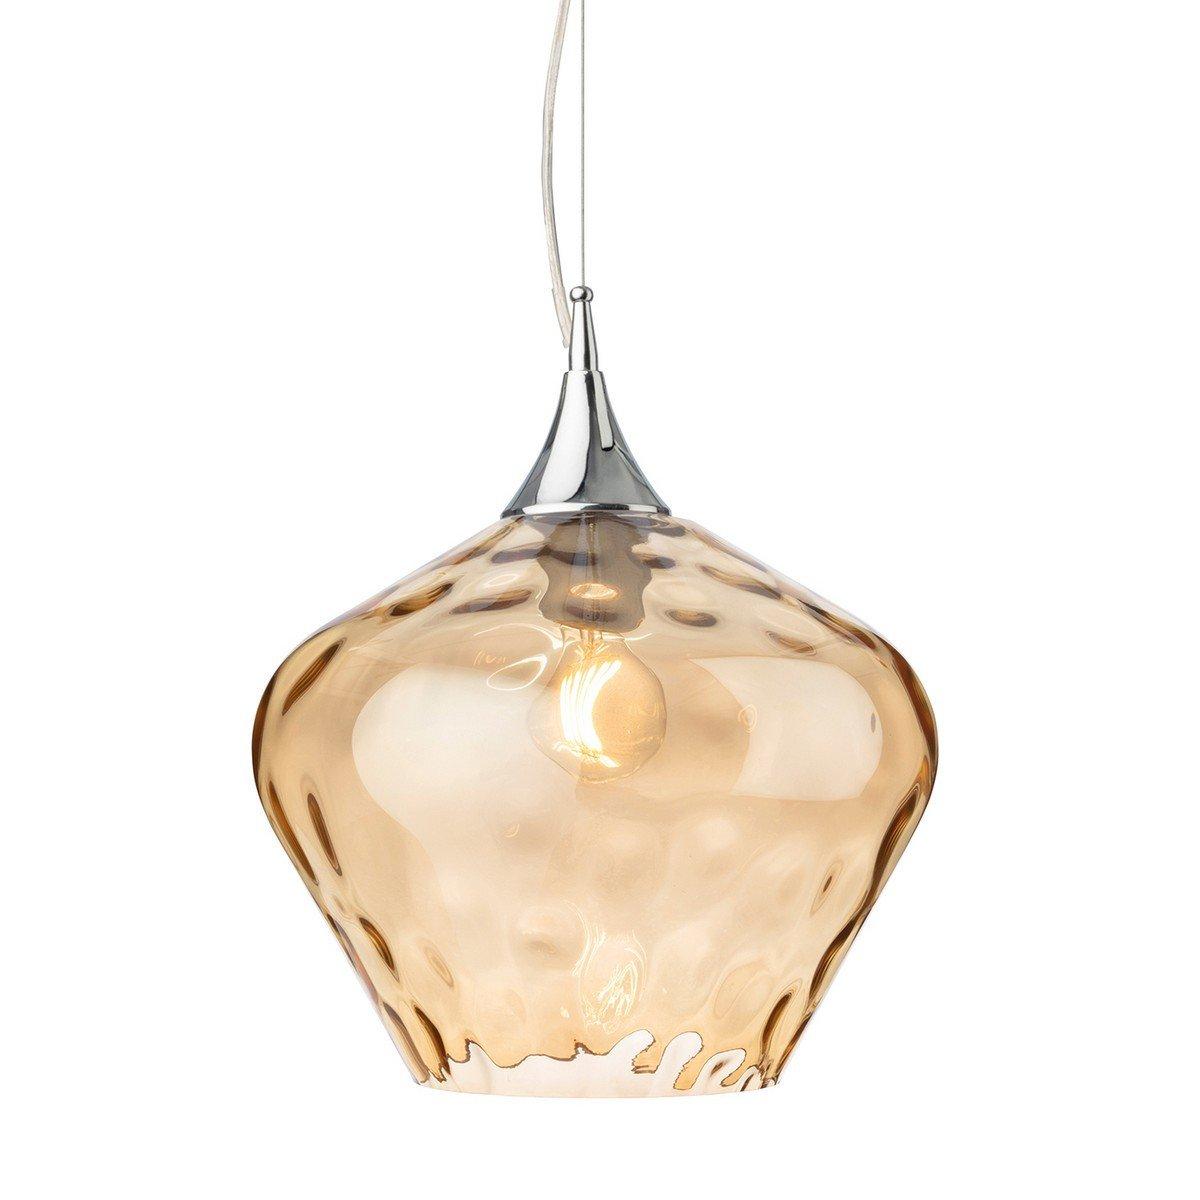 Titan Dome Pendant Light Chrome with Amber Glass